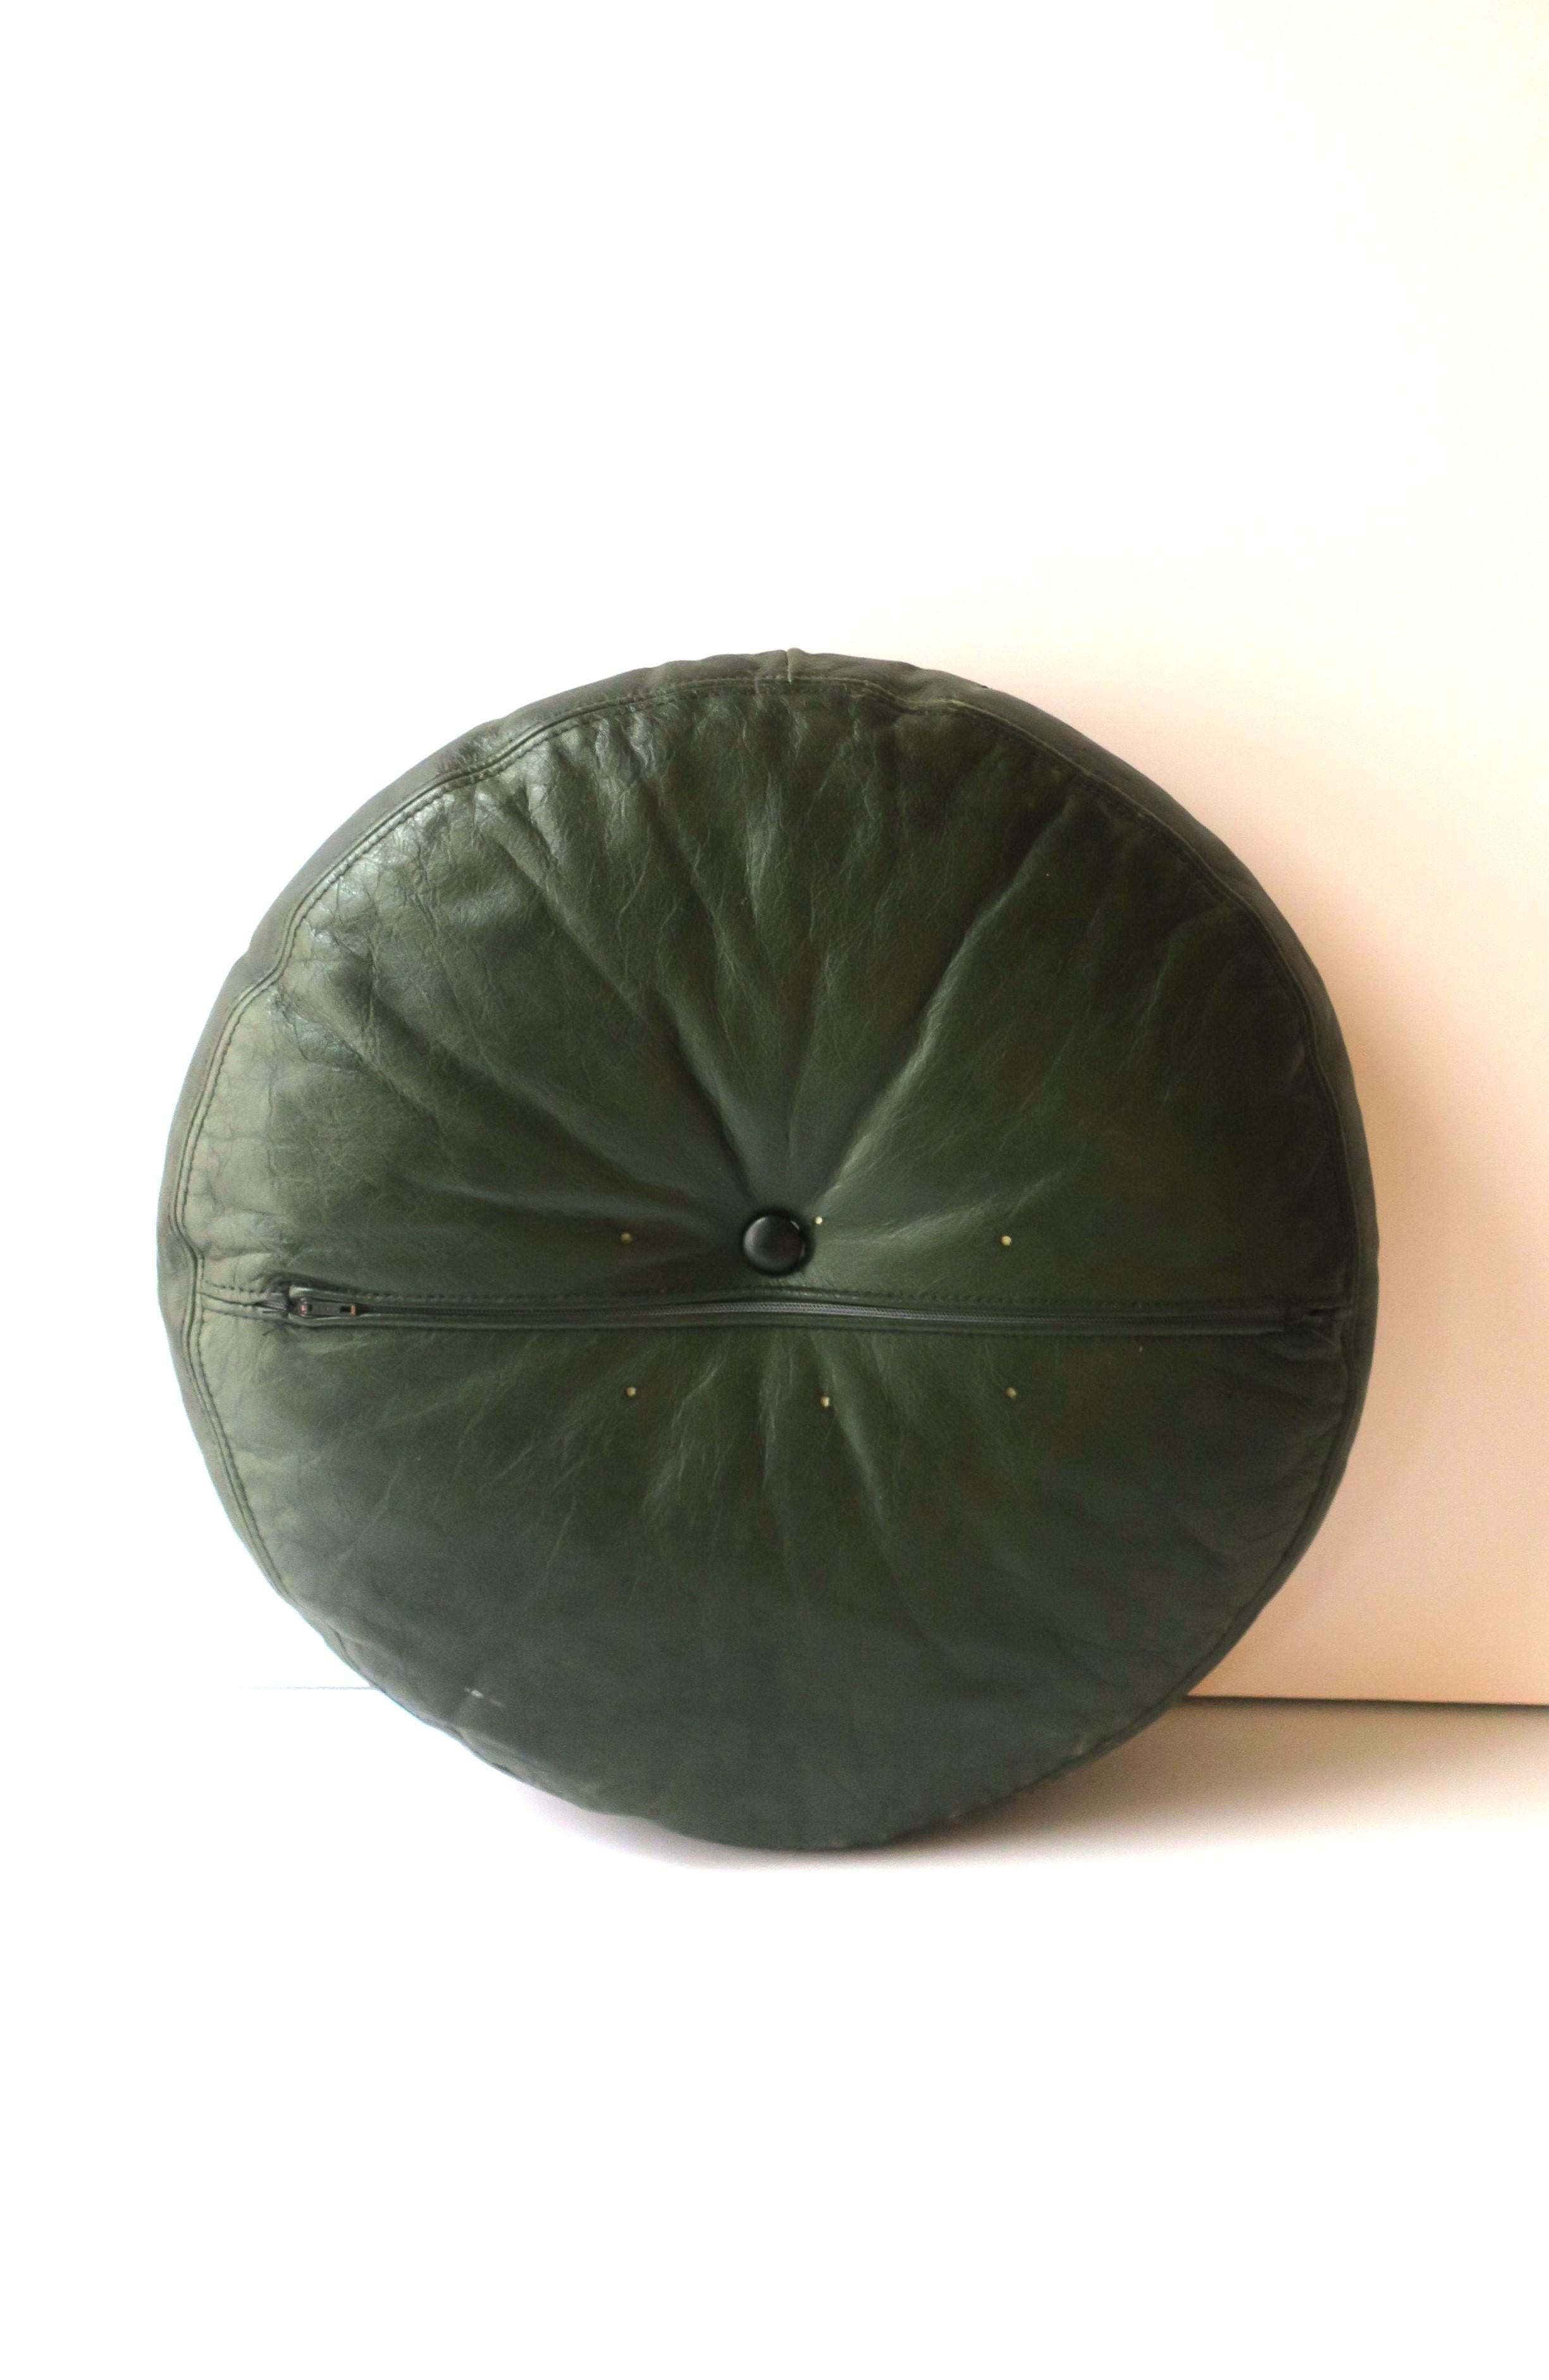 Scandinavian Modern Dark Green Round Leather Pillow, circa 1970s Sweden For Sale 1